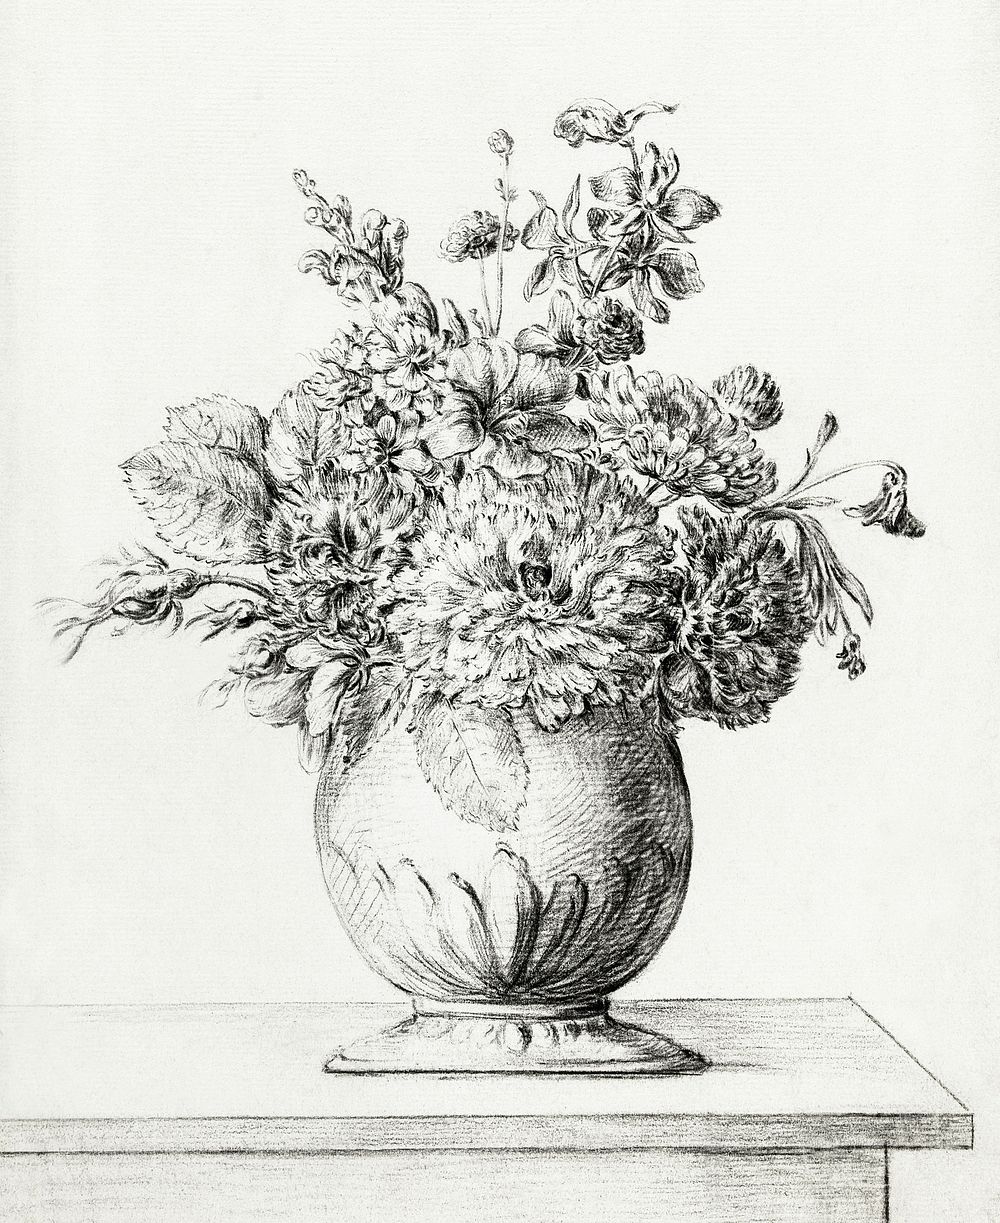 Flowers in a vase by Jean Bernard (1775-1883). Original from The Rijksmuseum. Digitally enhanced by rawpixel.